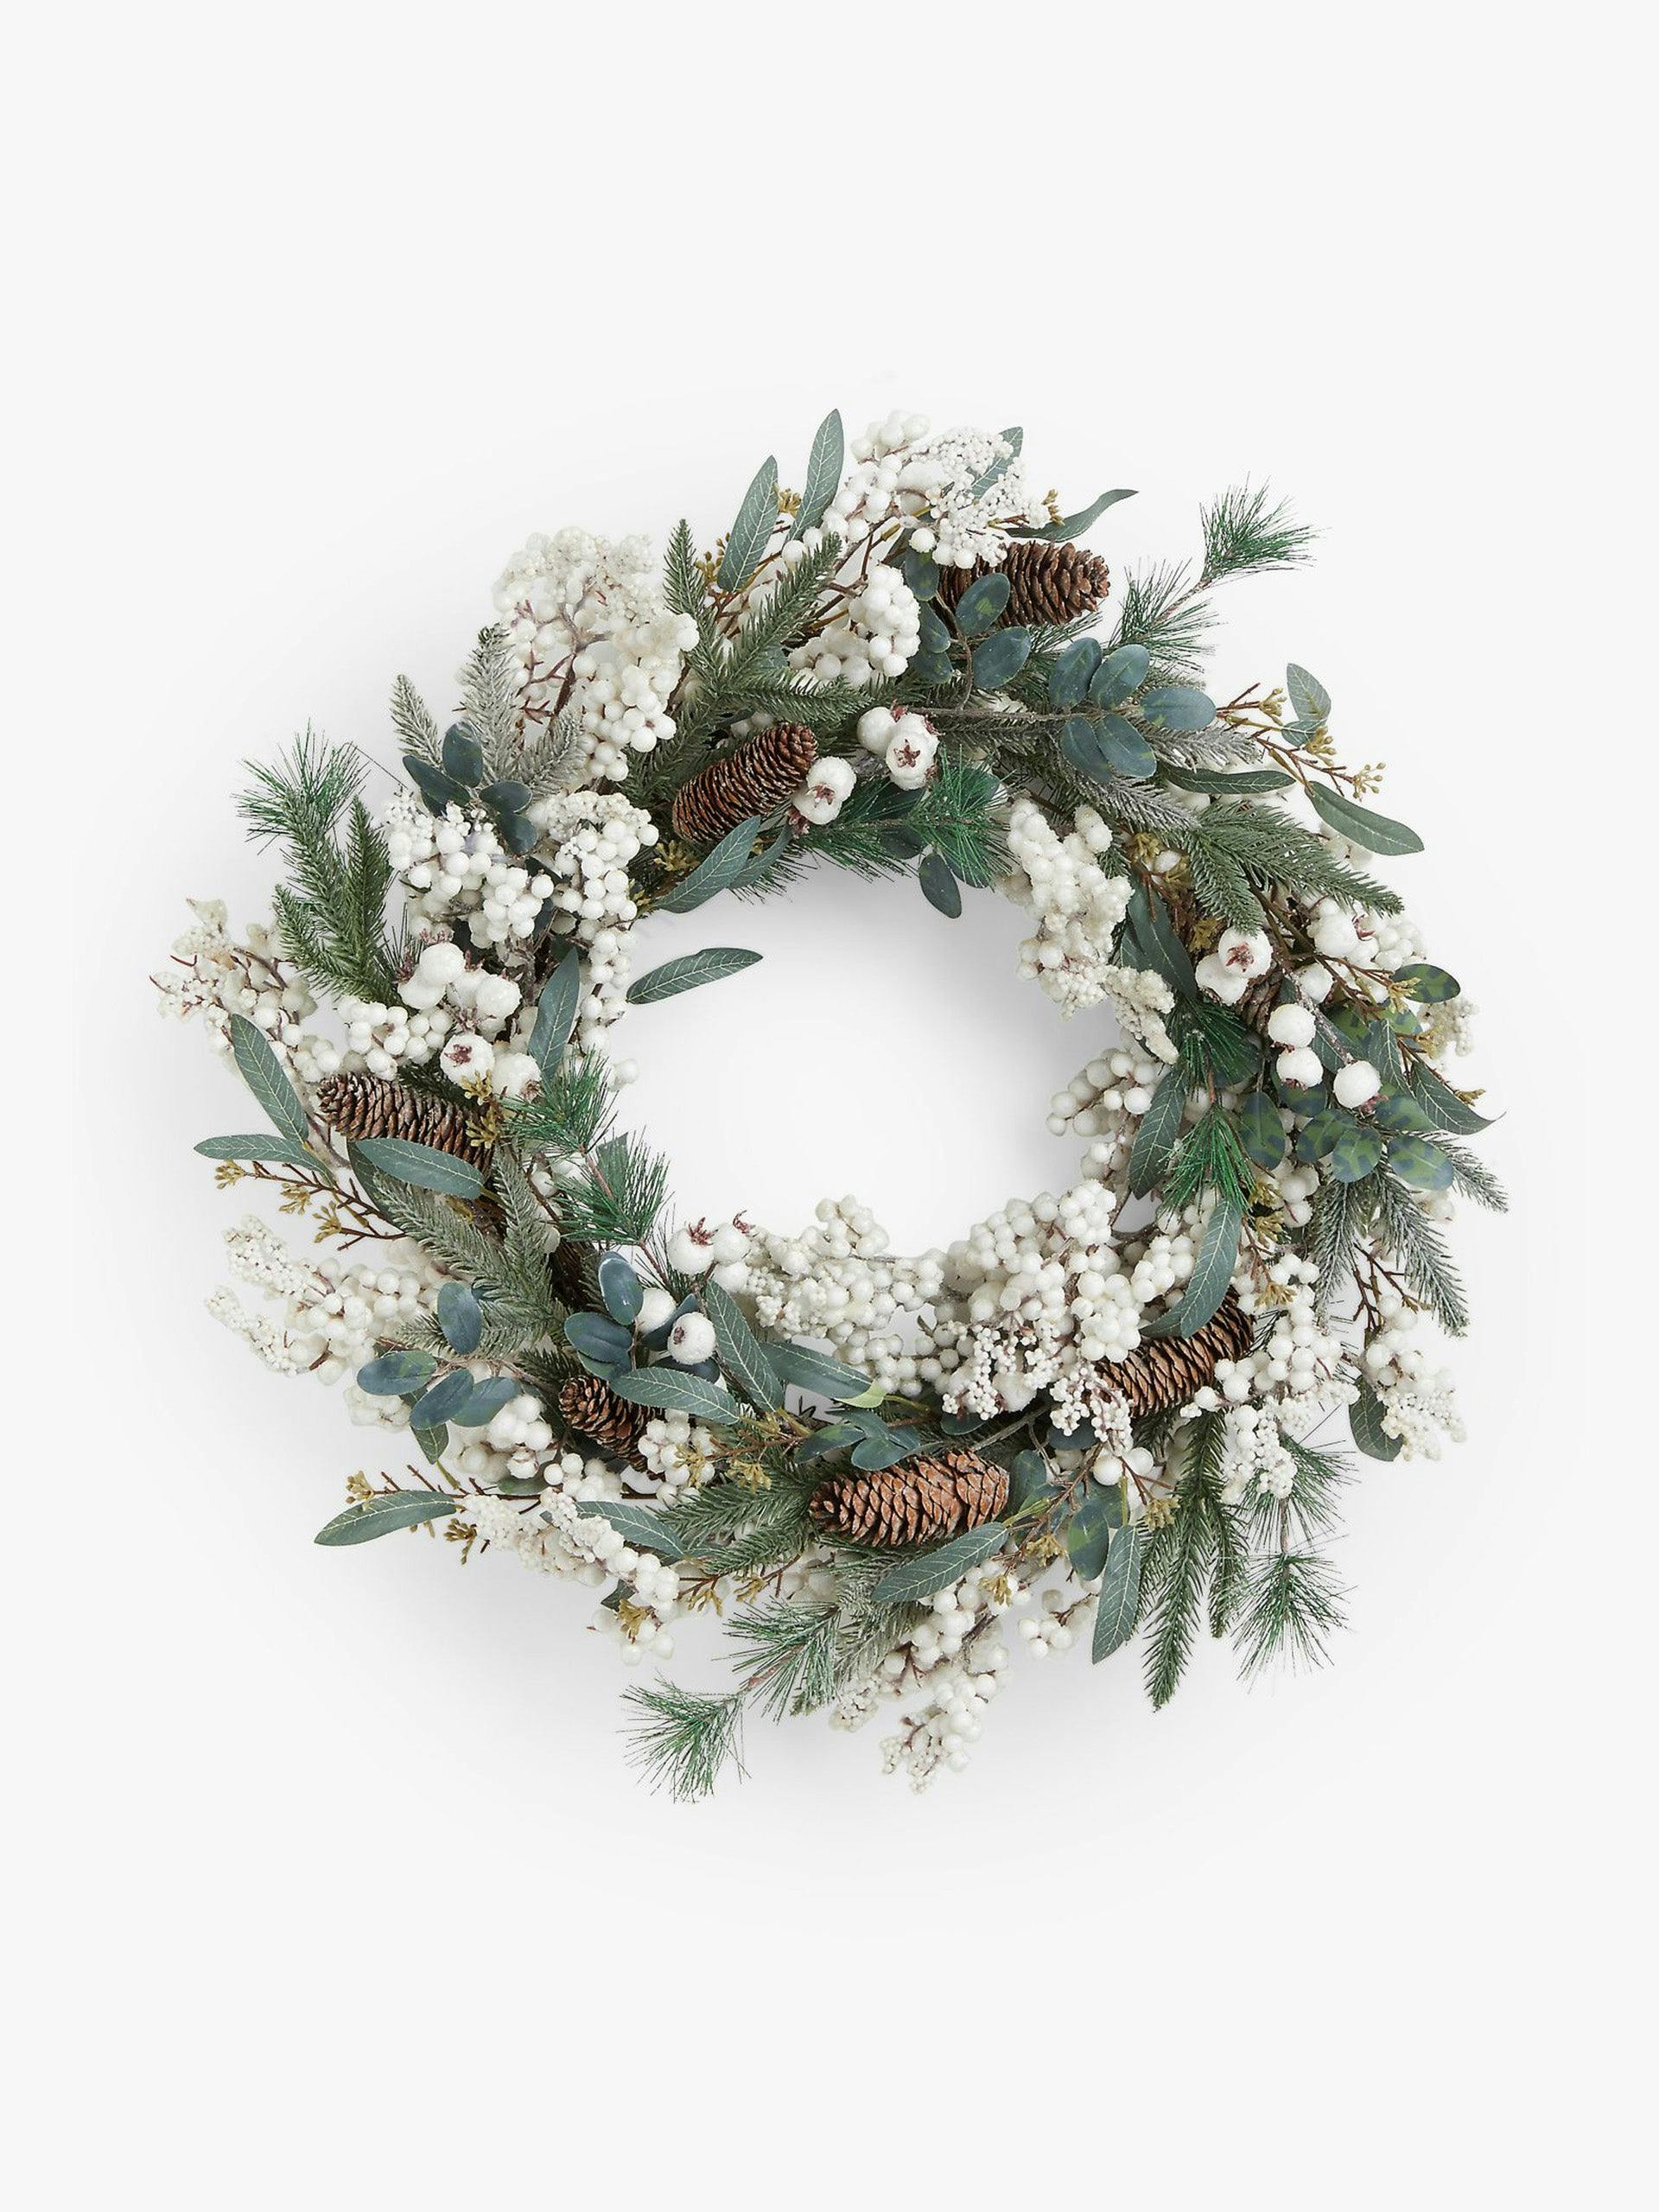 Pine and mistletoe wreath